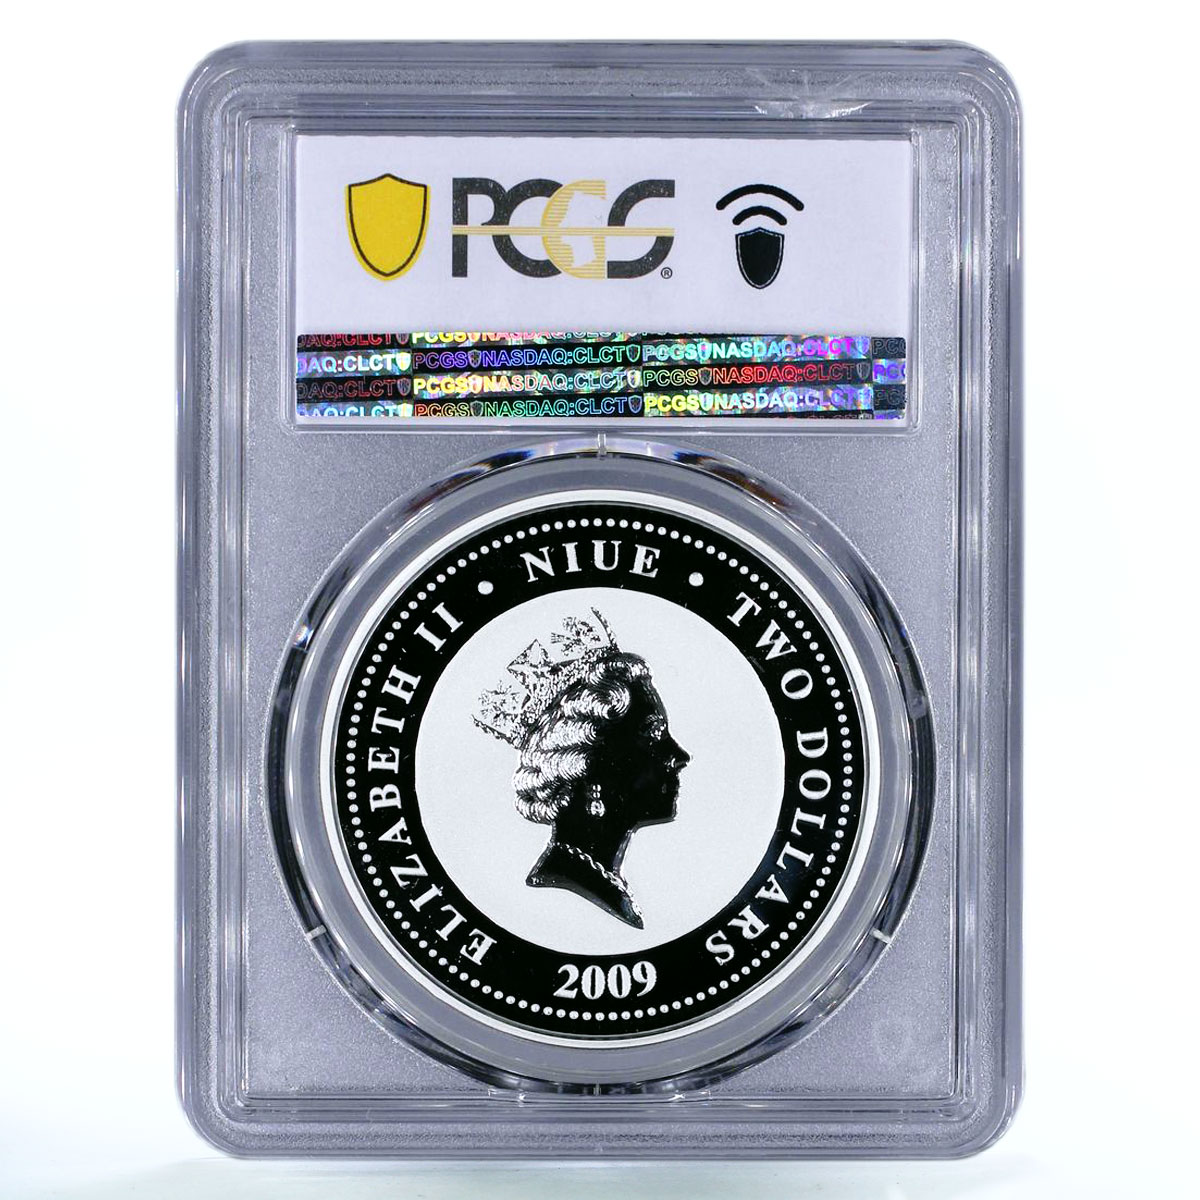 Niue 2 dollars Love is Precious Black Swans Birds PR70 PCGS colored Ag coin 2010